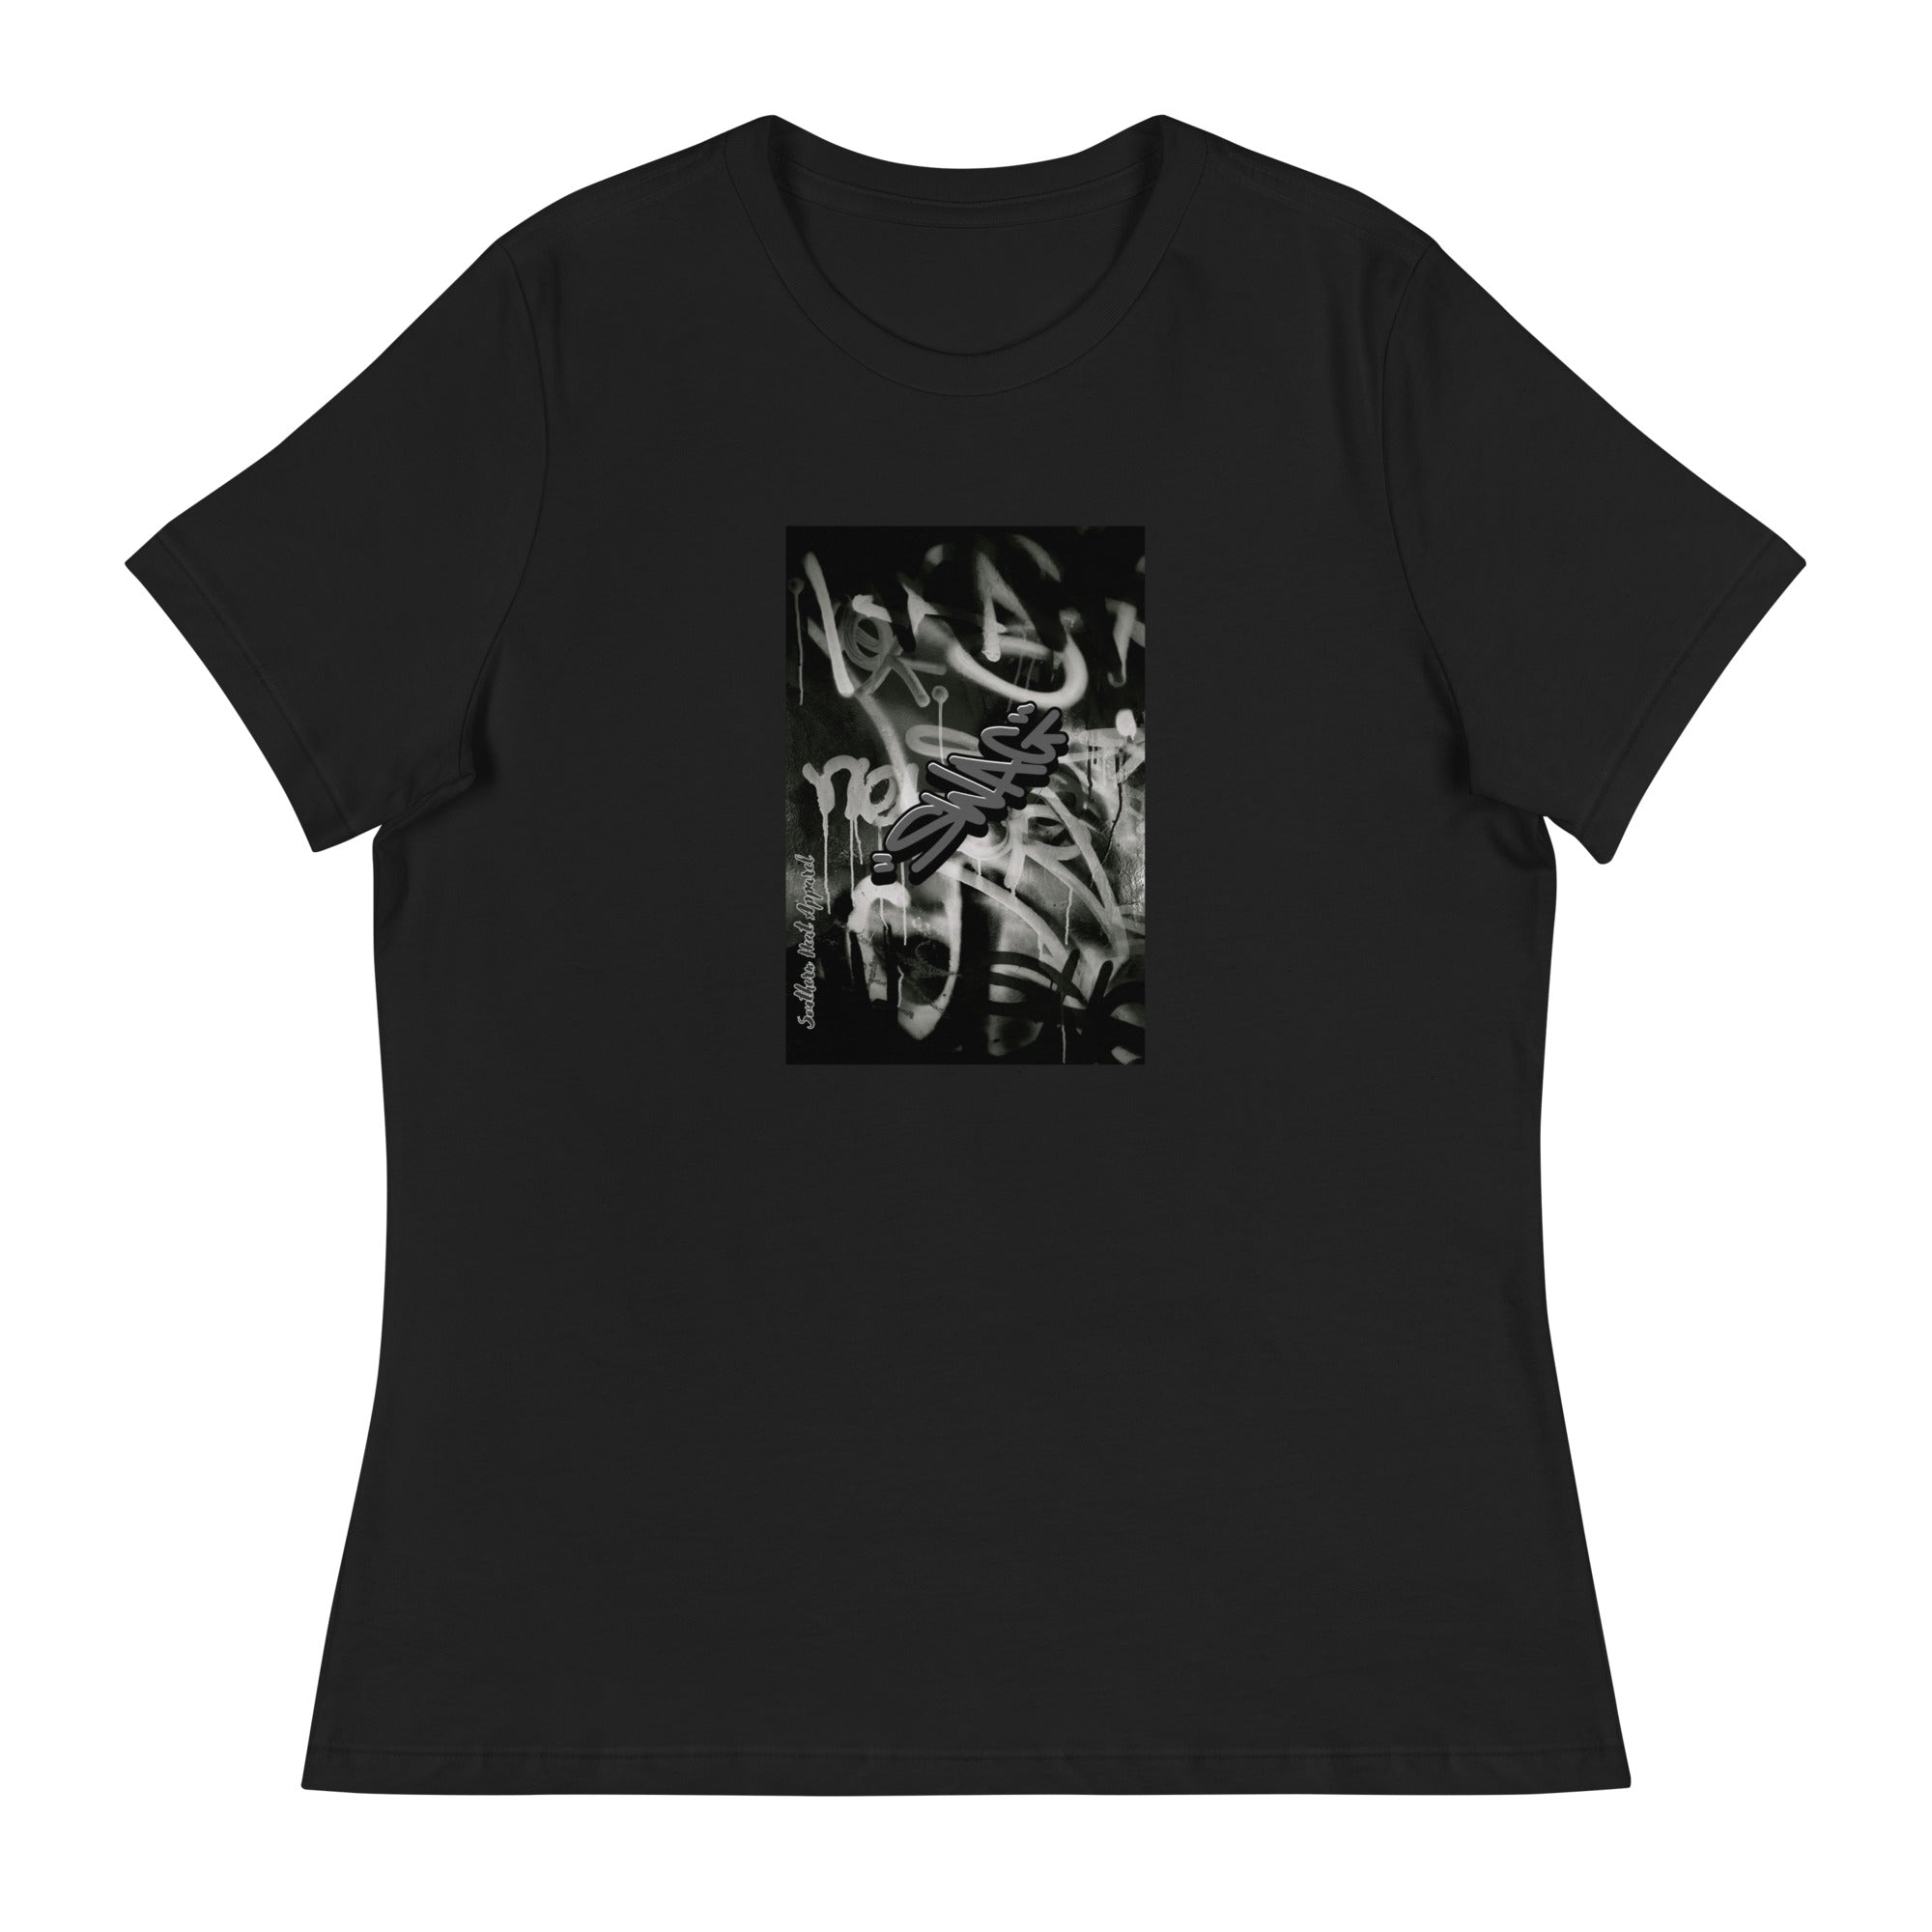 Mono.swag.graffiti-Women's Relaxed T-Shirt